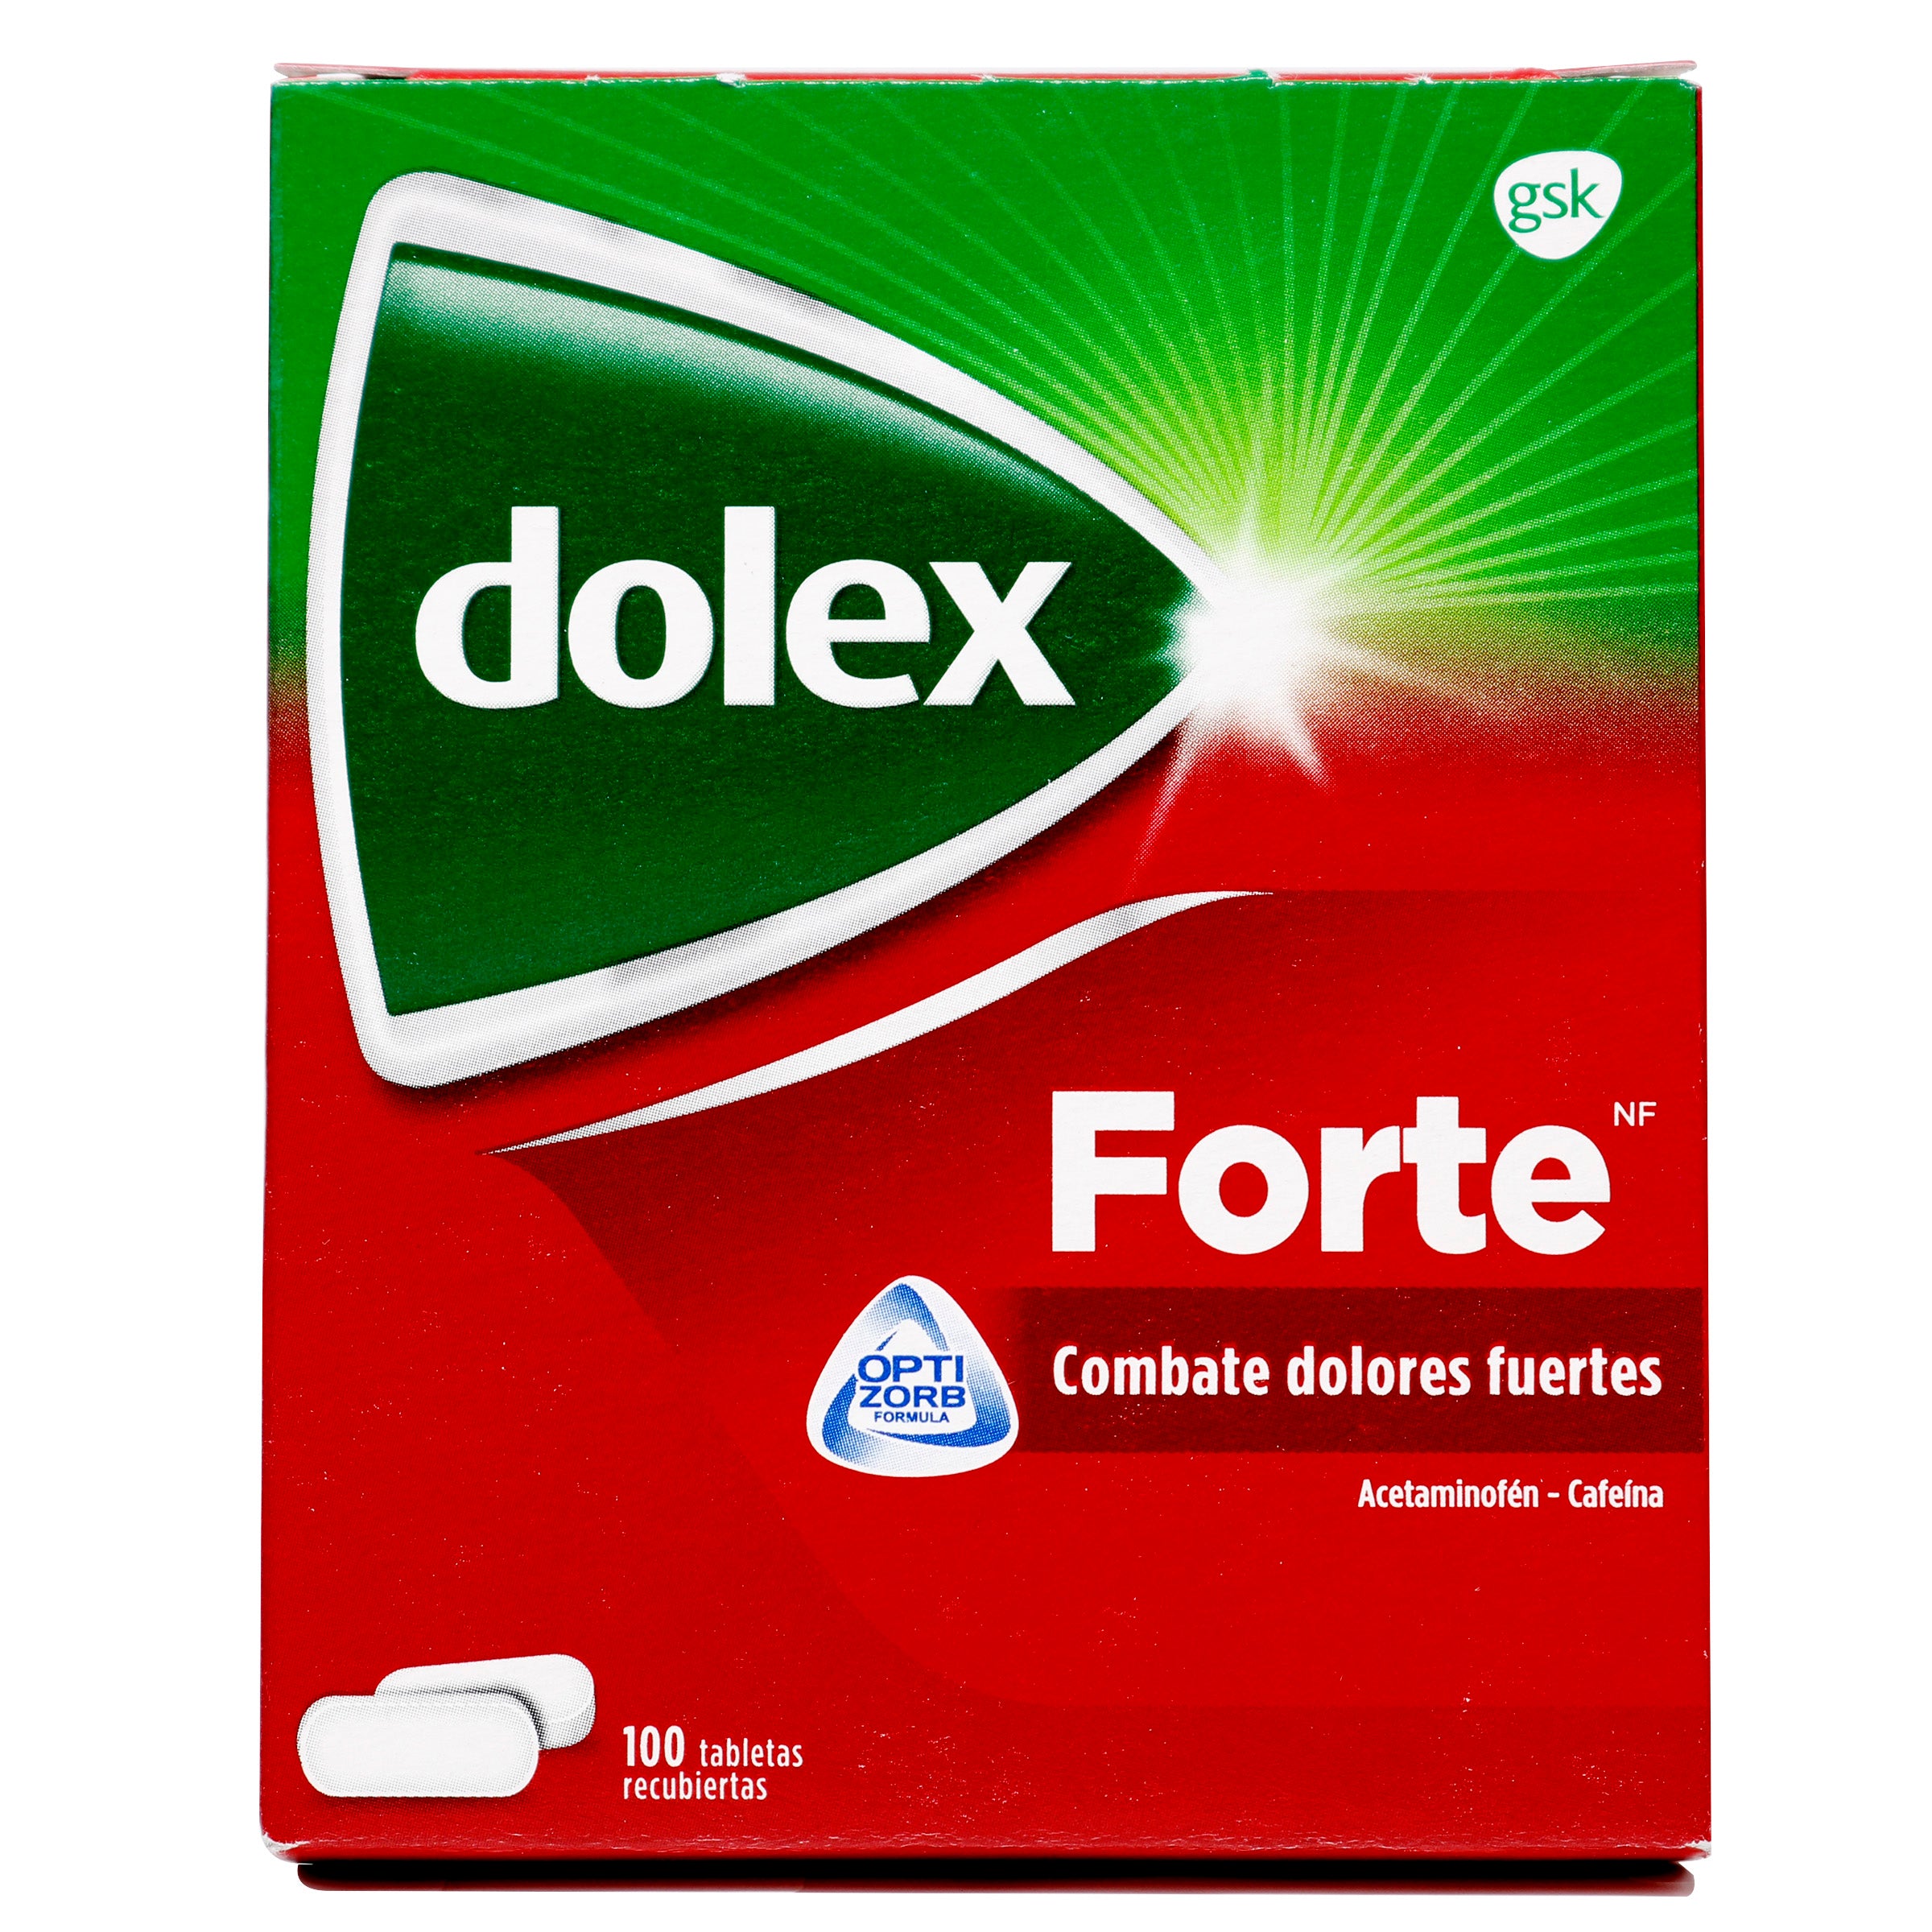 (F) DOLEX FORTE 500 MG 100 TABLETAS - (EXH4)